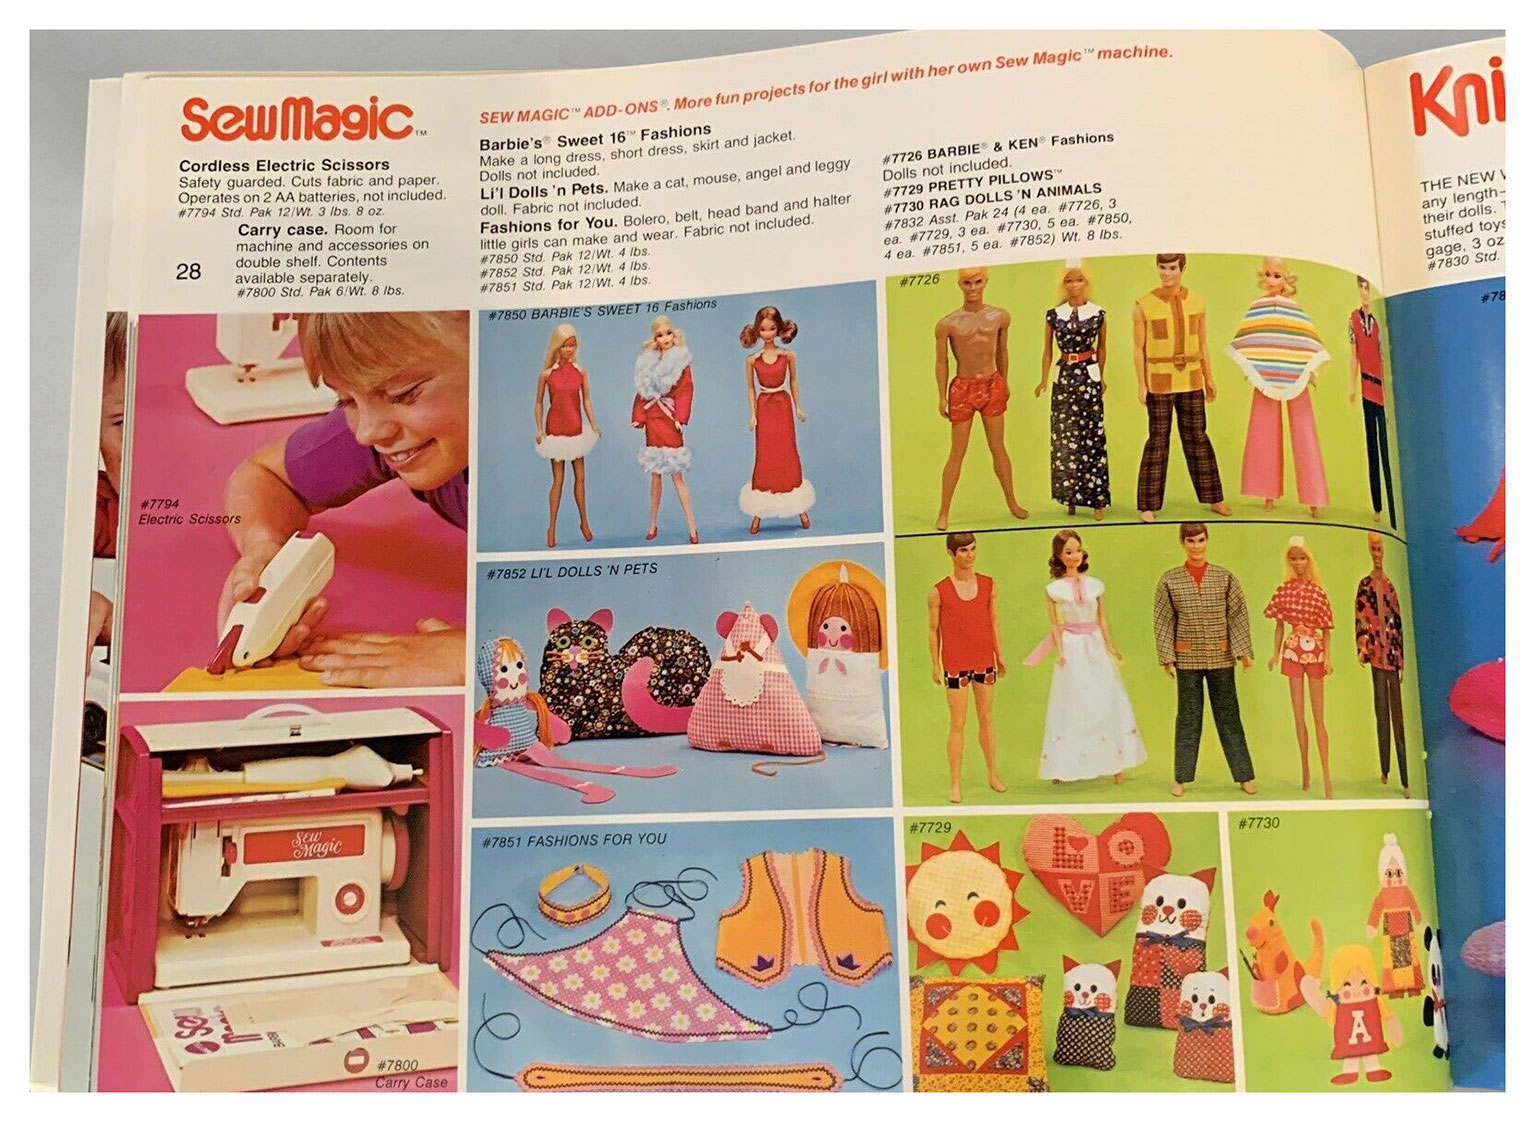 1974 Mattel Toys catalogue